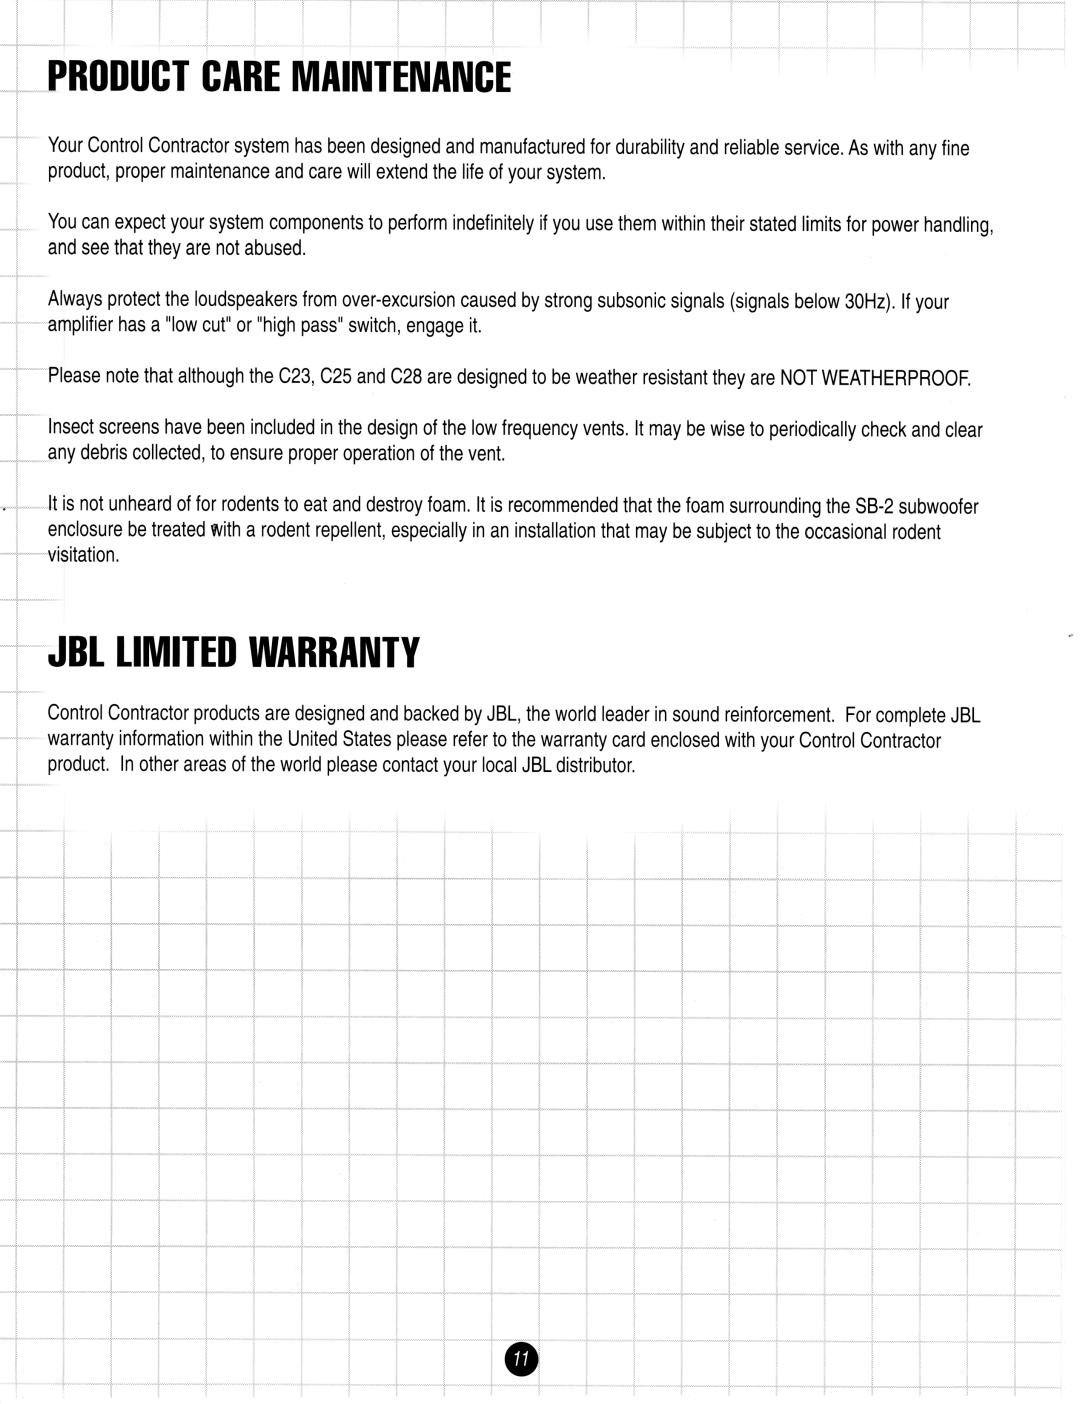 JBL Speaker System manual Roduct Care Maintenance, Jbl Limited Warranty 